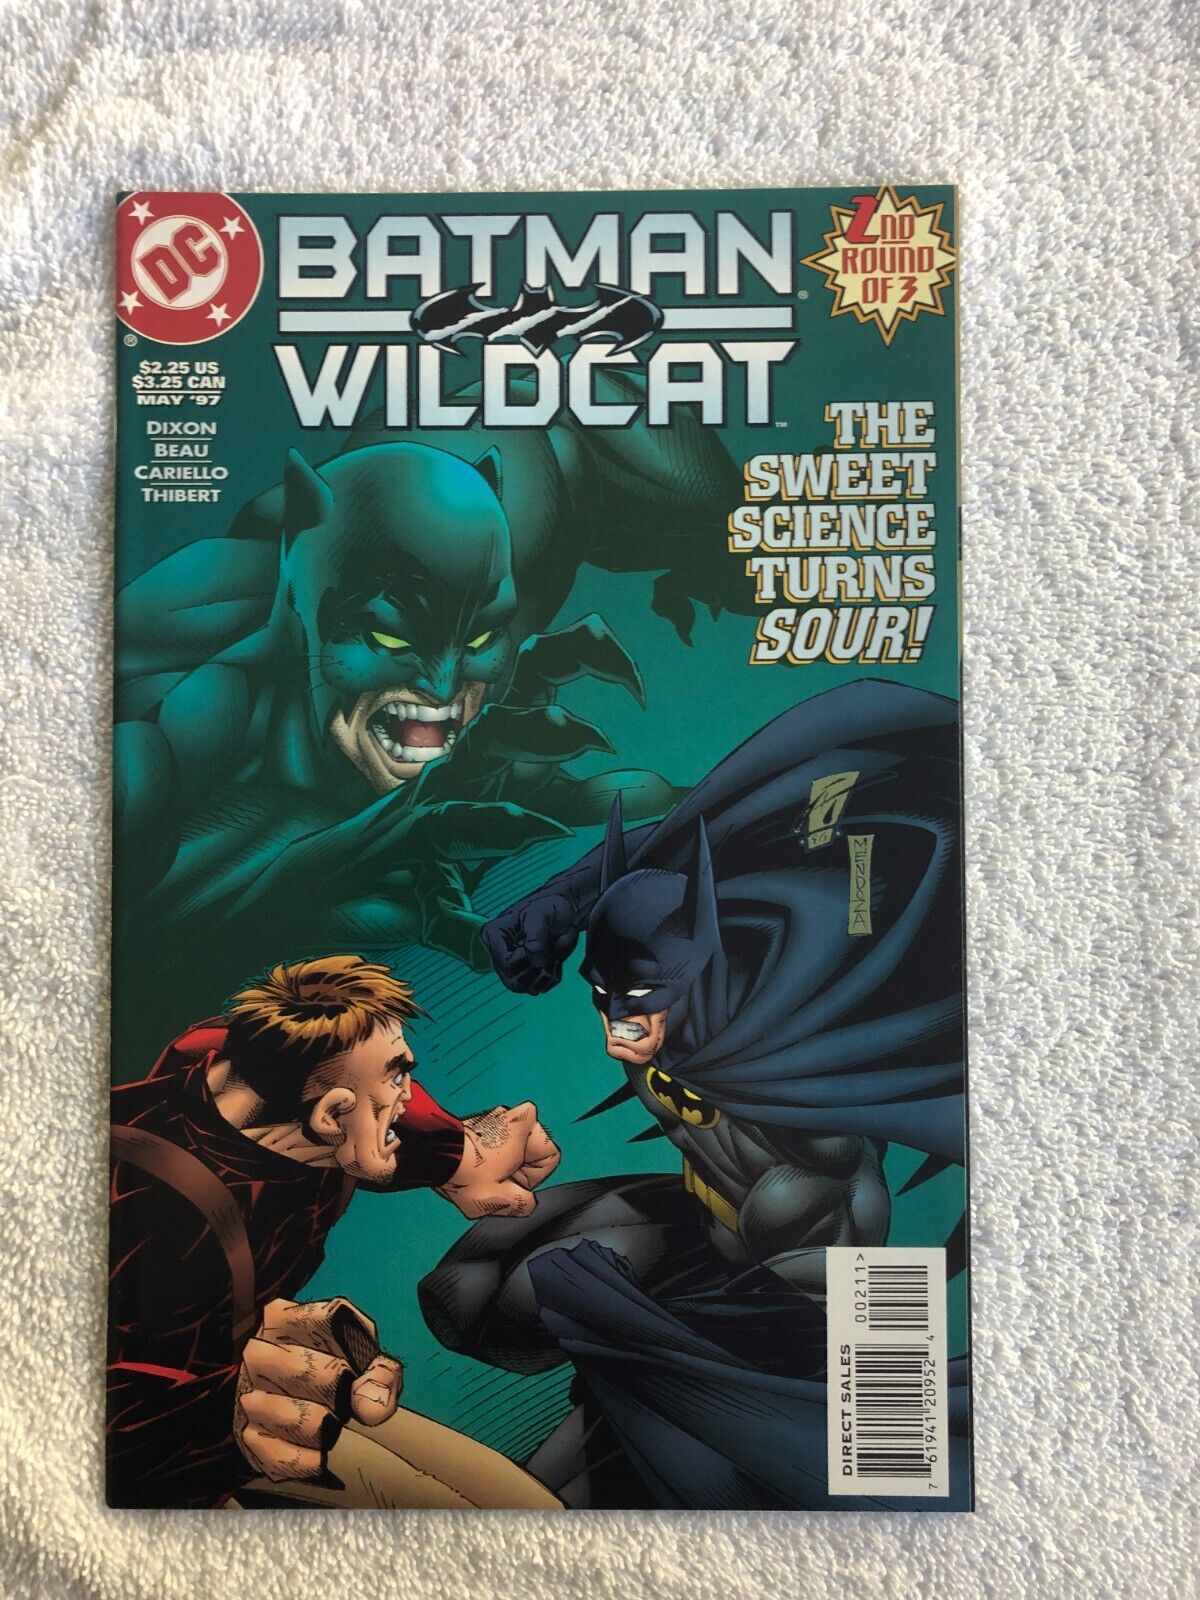 Batman Wildcat #2 (May 1997, DC) VF+ 8.5